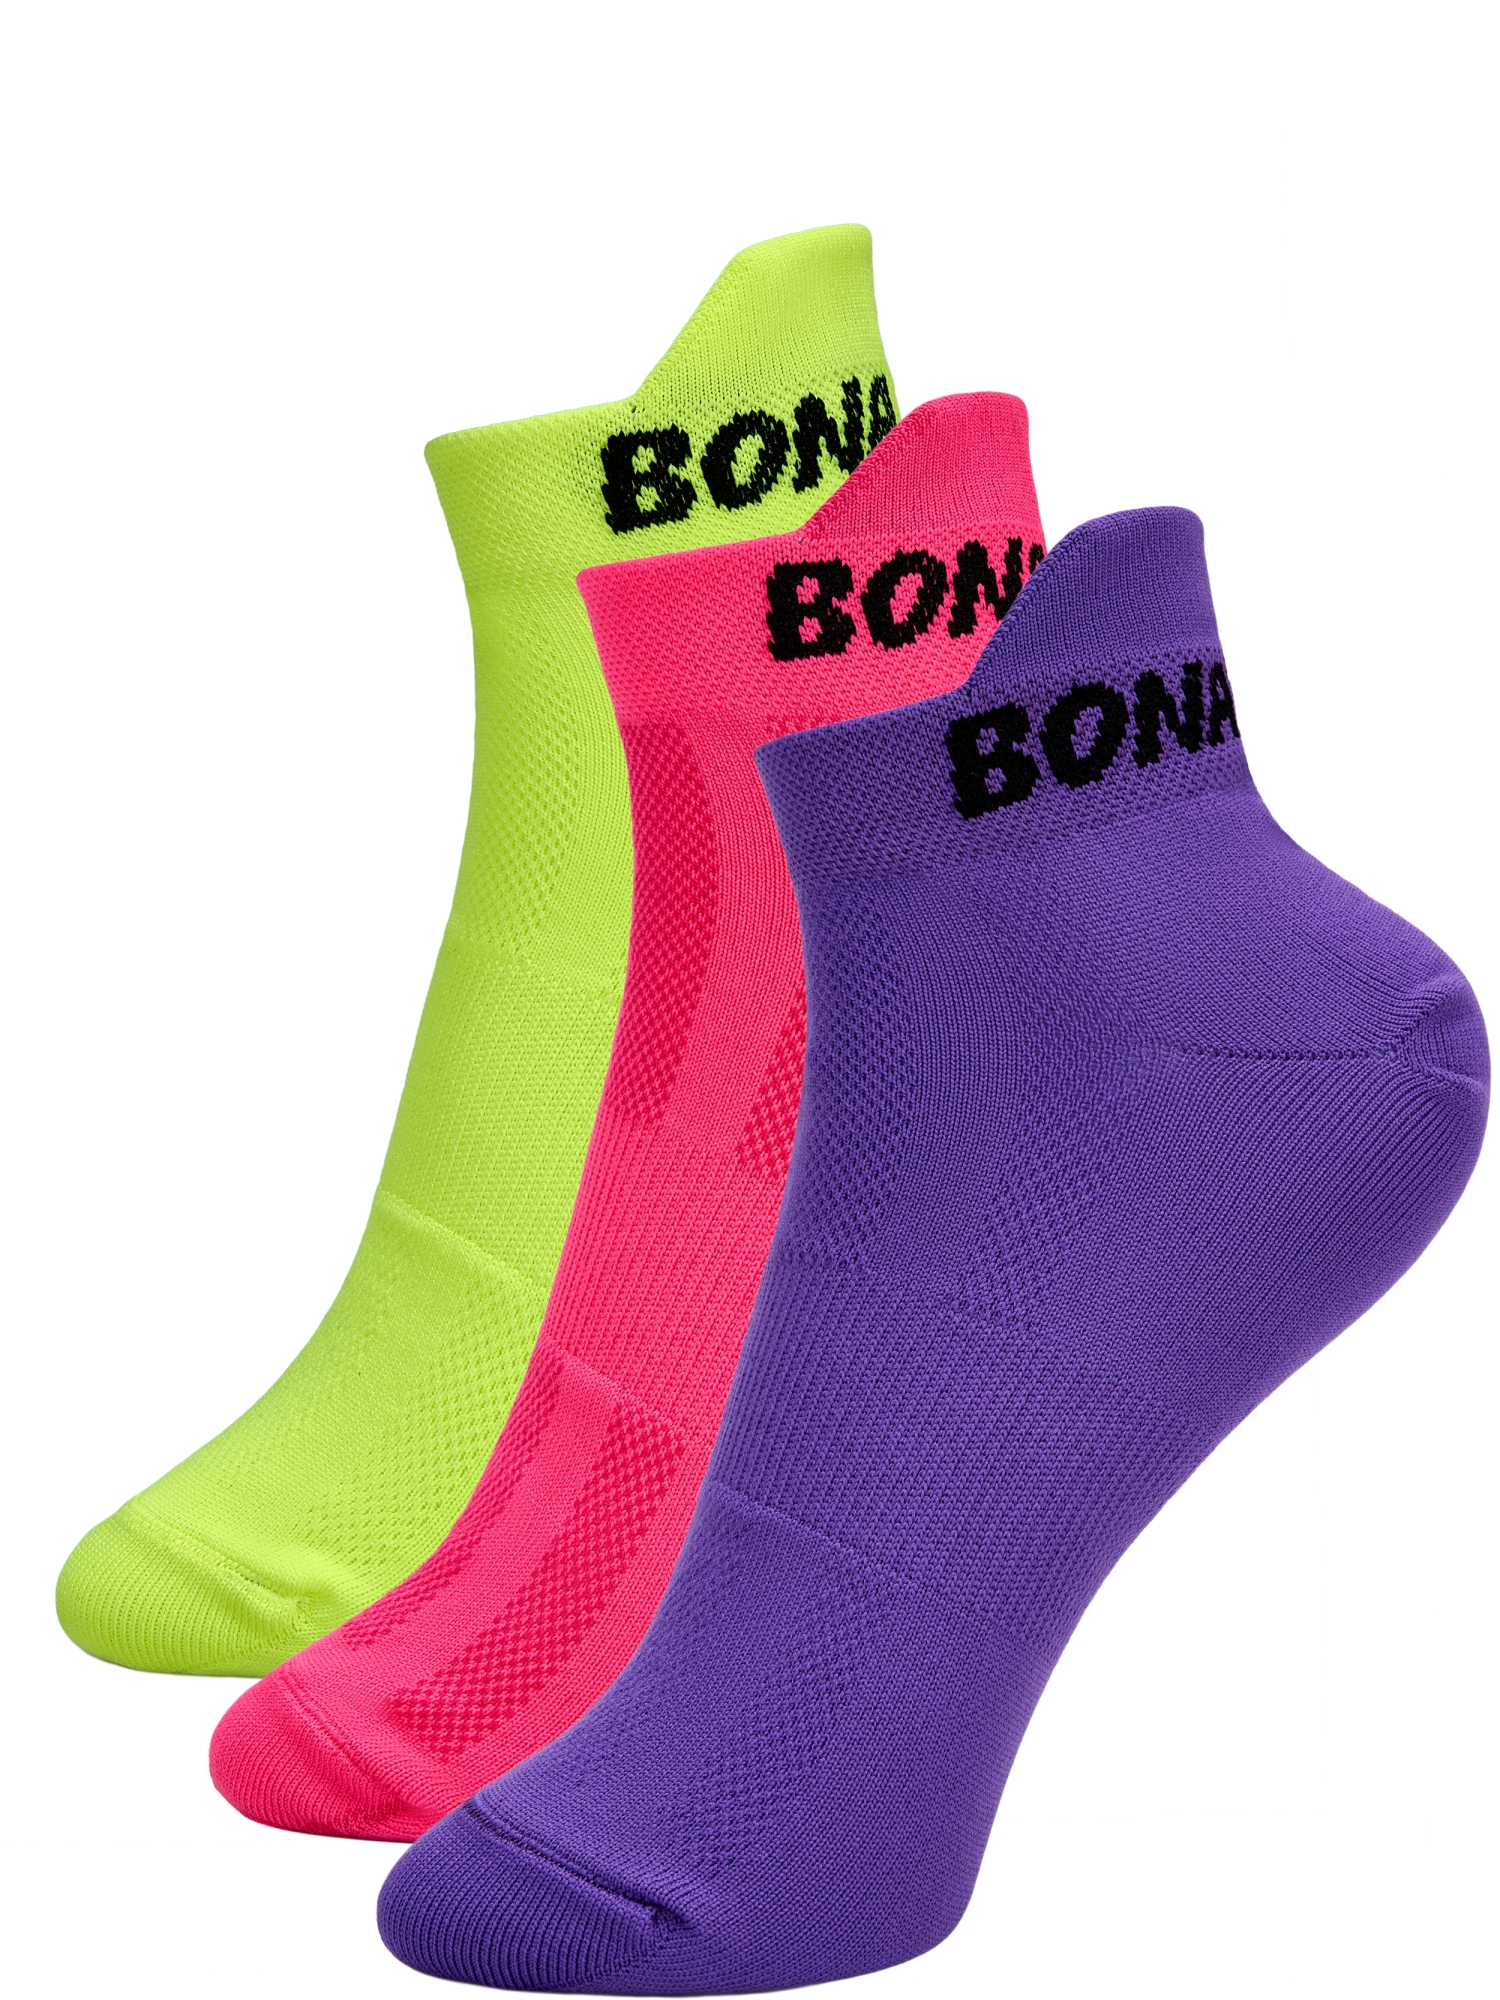 Bona Fide: Color Set of Socks(3 пары) фото 2